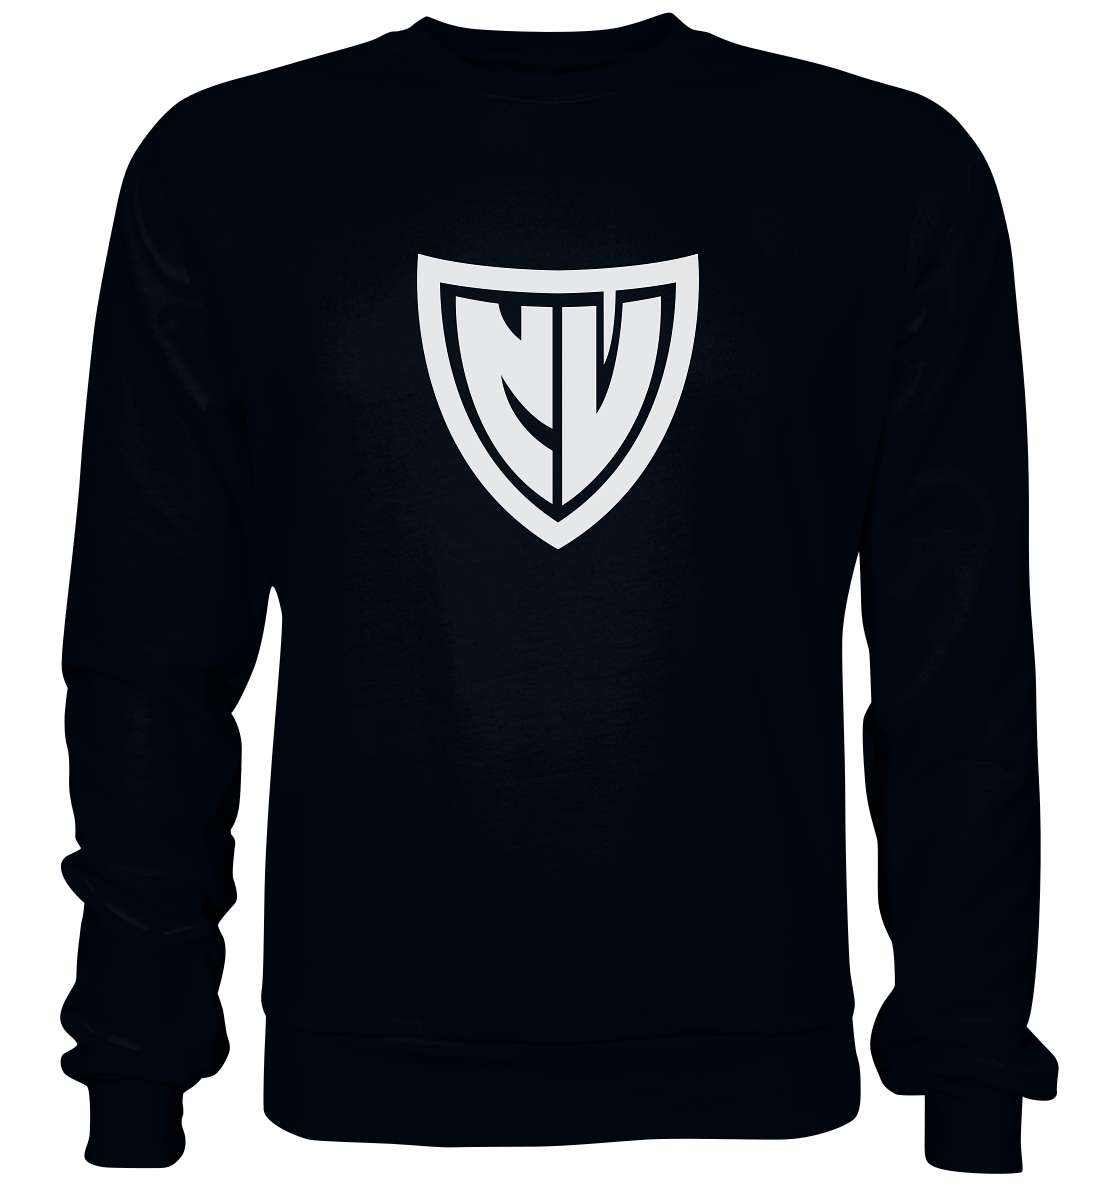 NEW VISION ESPORTS - Basic Sweatshirt